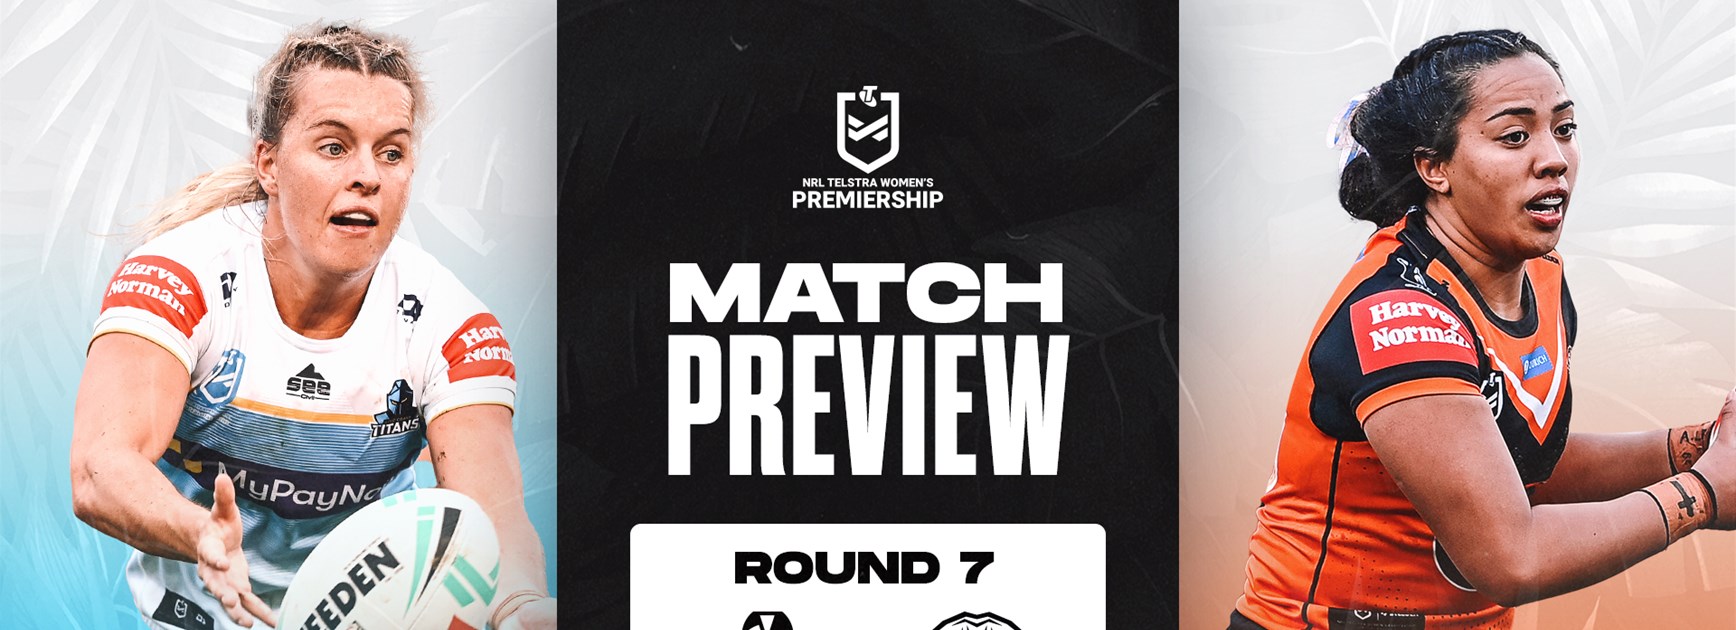 Match Preview: NRLW Round 7 vs Titans